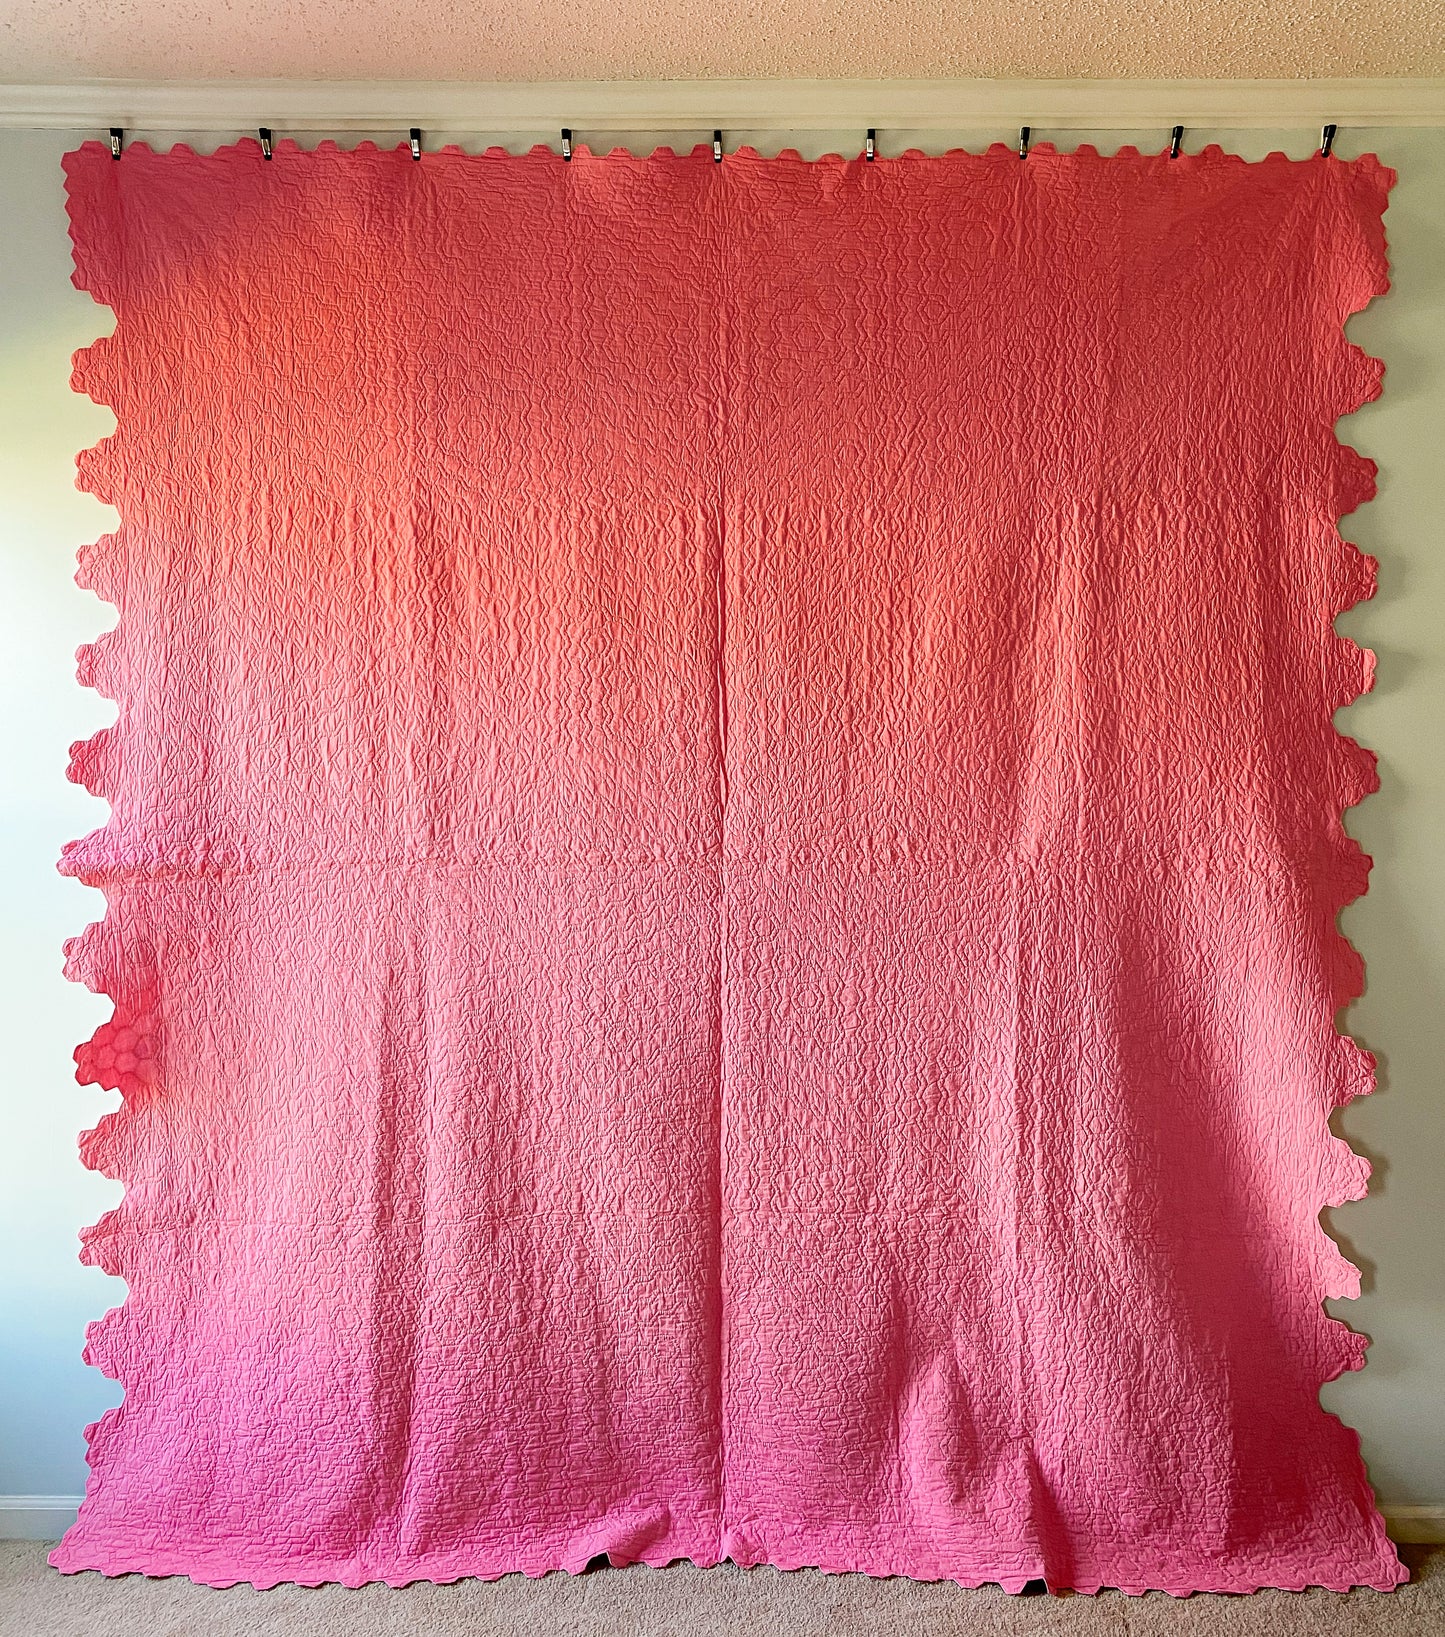 Vintage Radiating Diamond Fields Pink Quilt, c1930